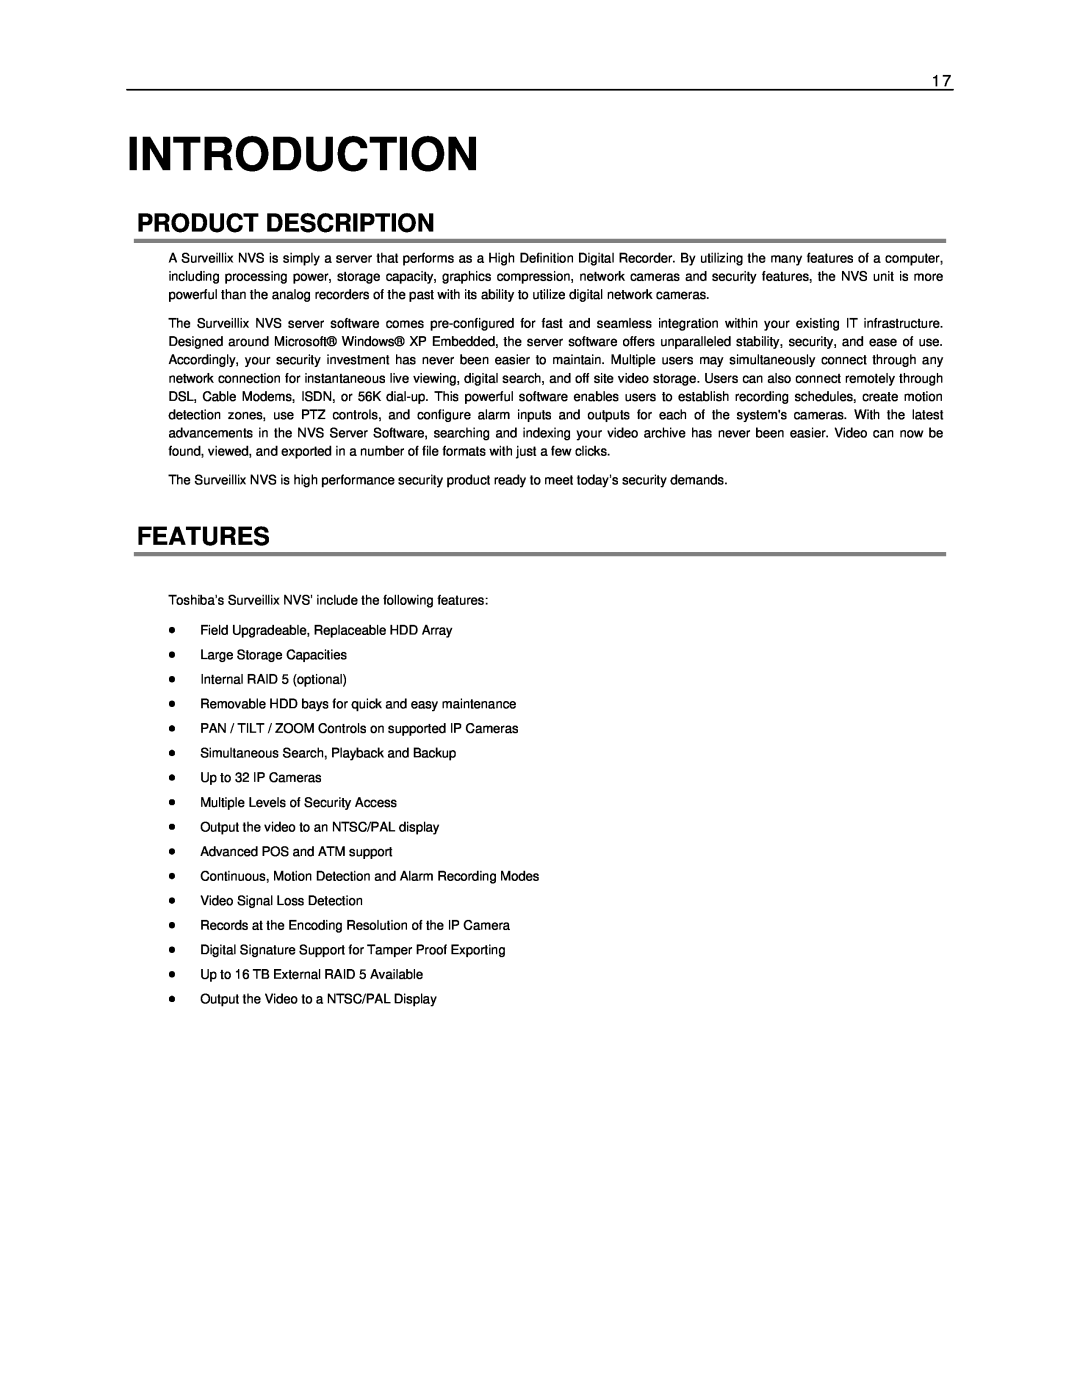 Toshiba NVS8-X, NVS32-X, NVS16-X user manual Introduction, Product Description, Features 